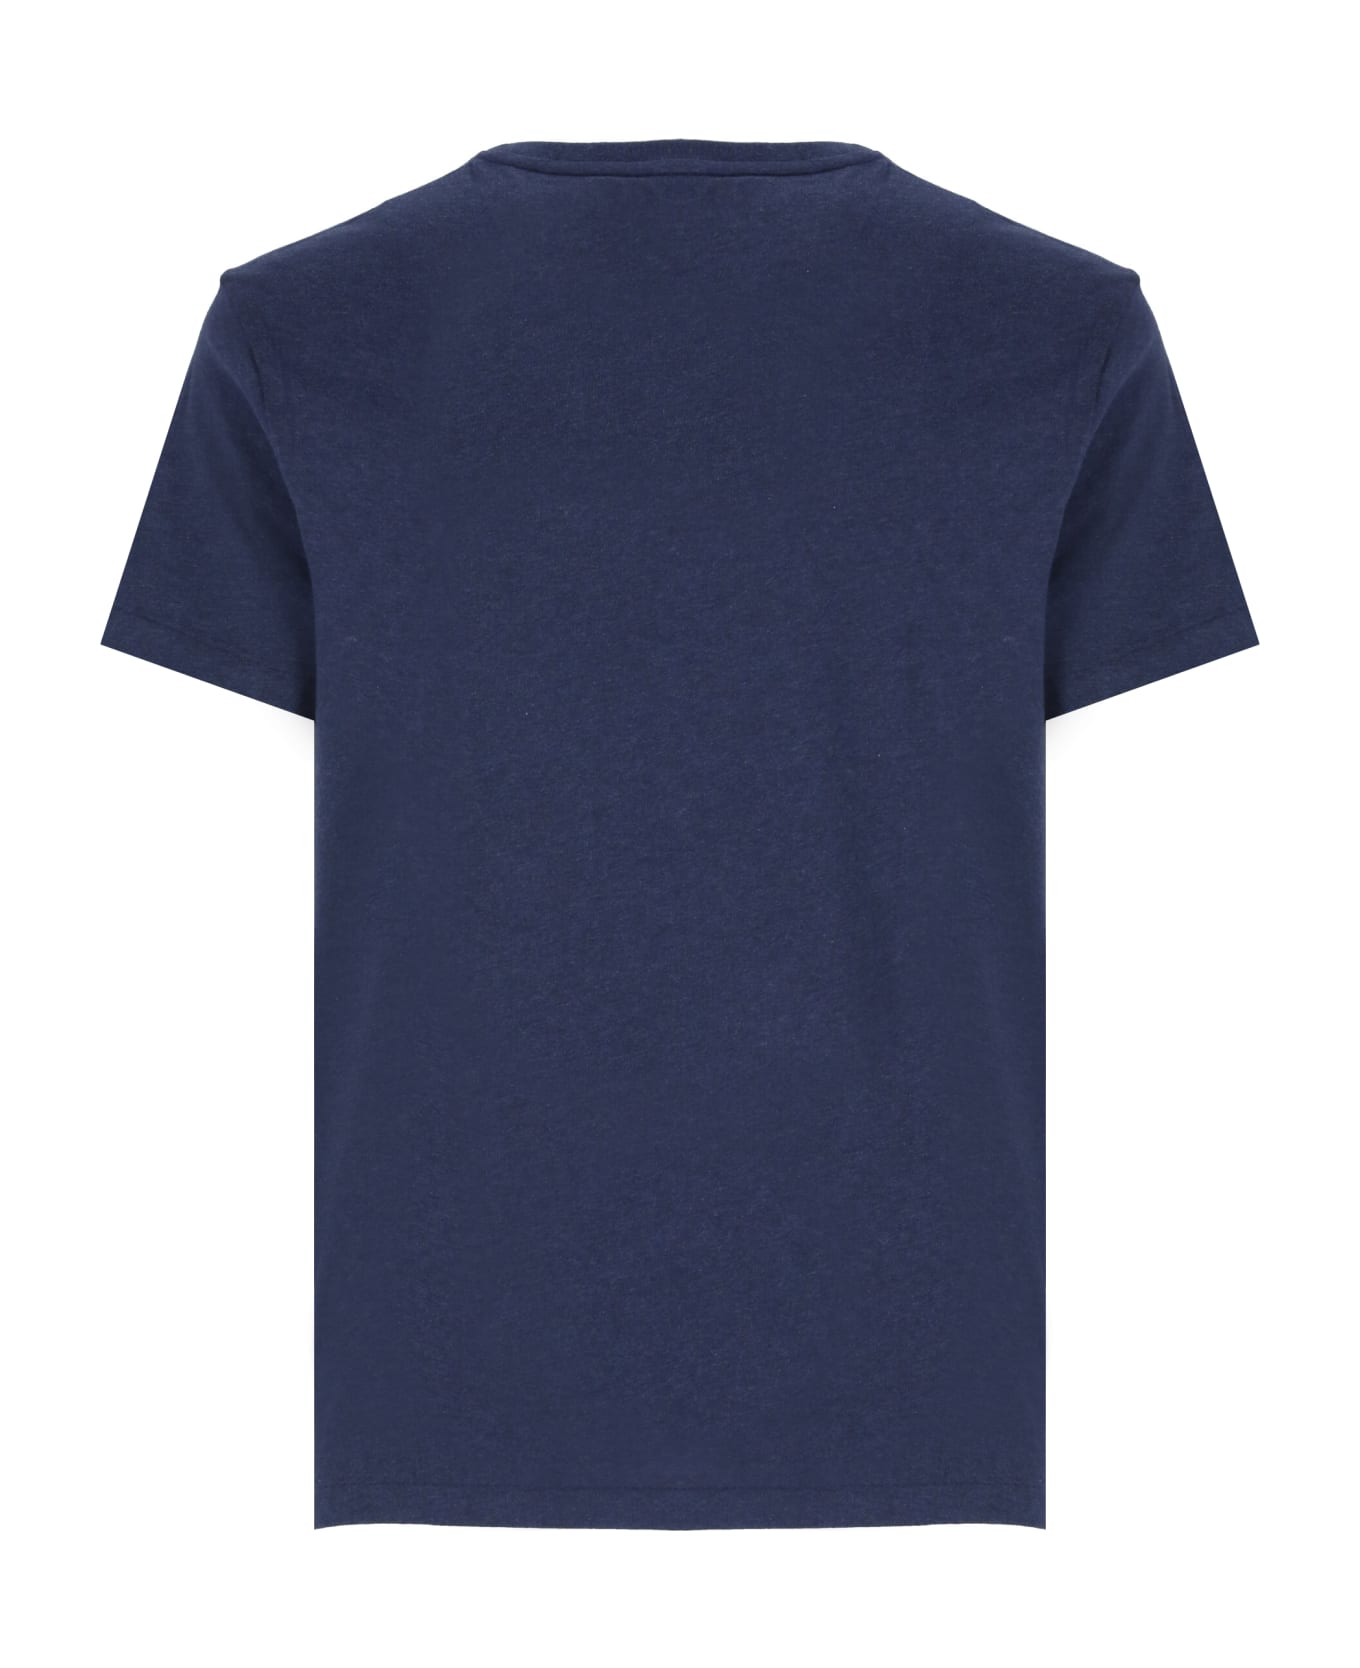 Ralph Lauren T-shirt With Pony - Blue